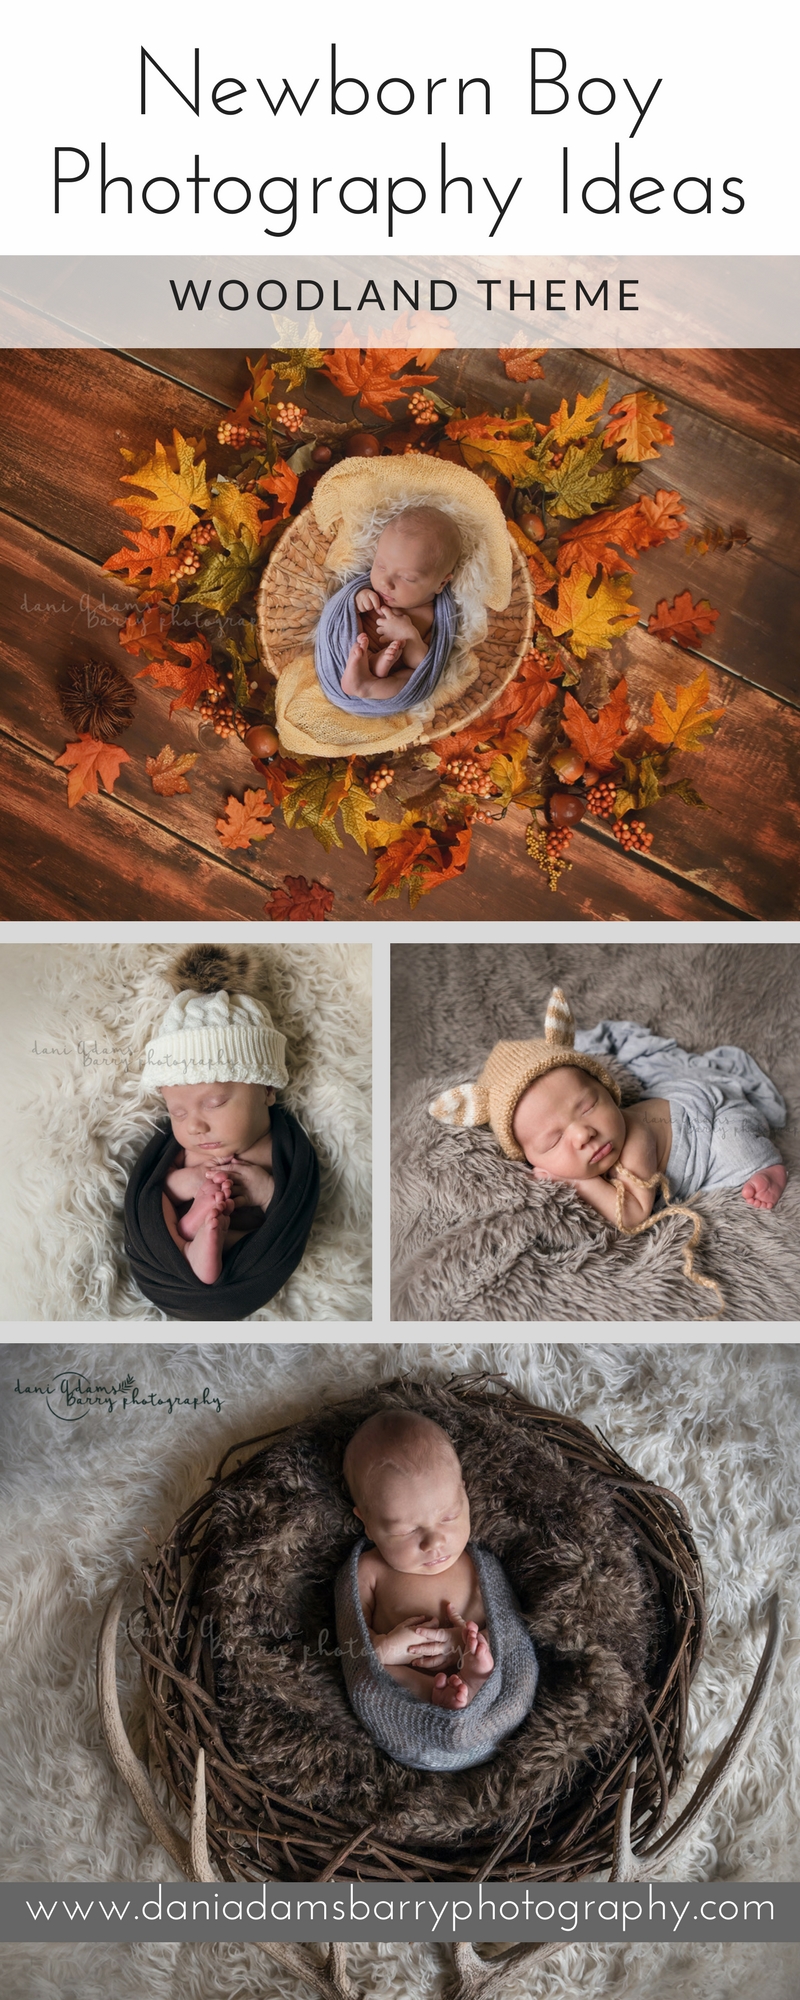 Newborn Boy Photography Ideas. Woodland themed Newborn Photography Dallas TX. Baby Portrait Inspiration by Dallas Photographer Dani Adams Barry